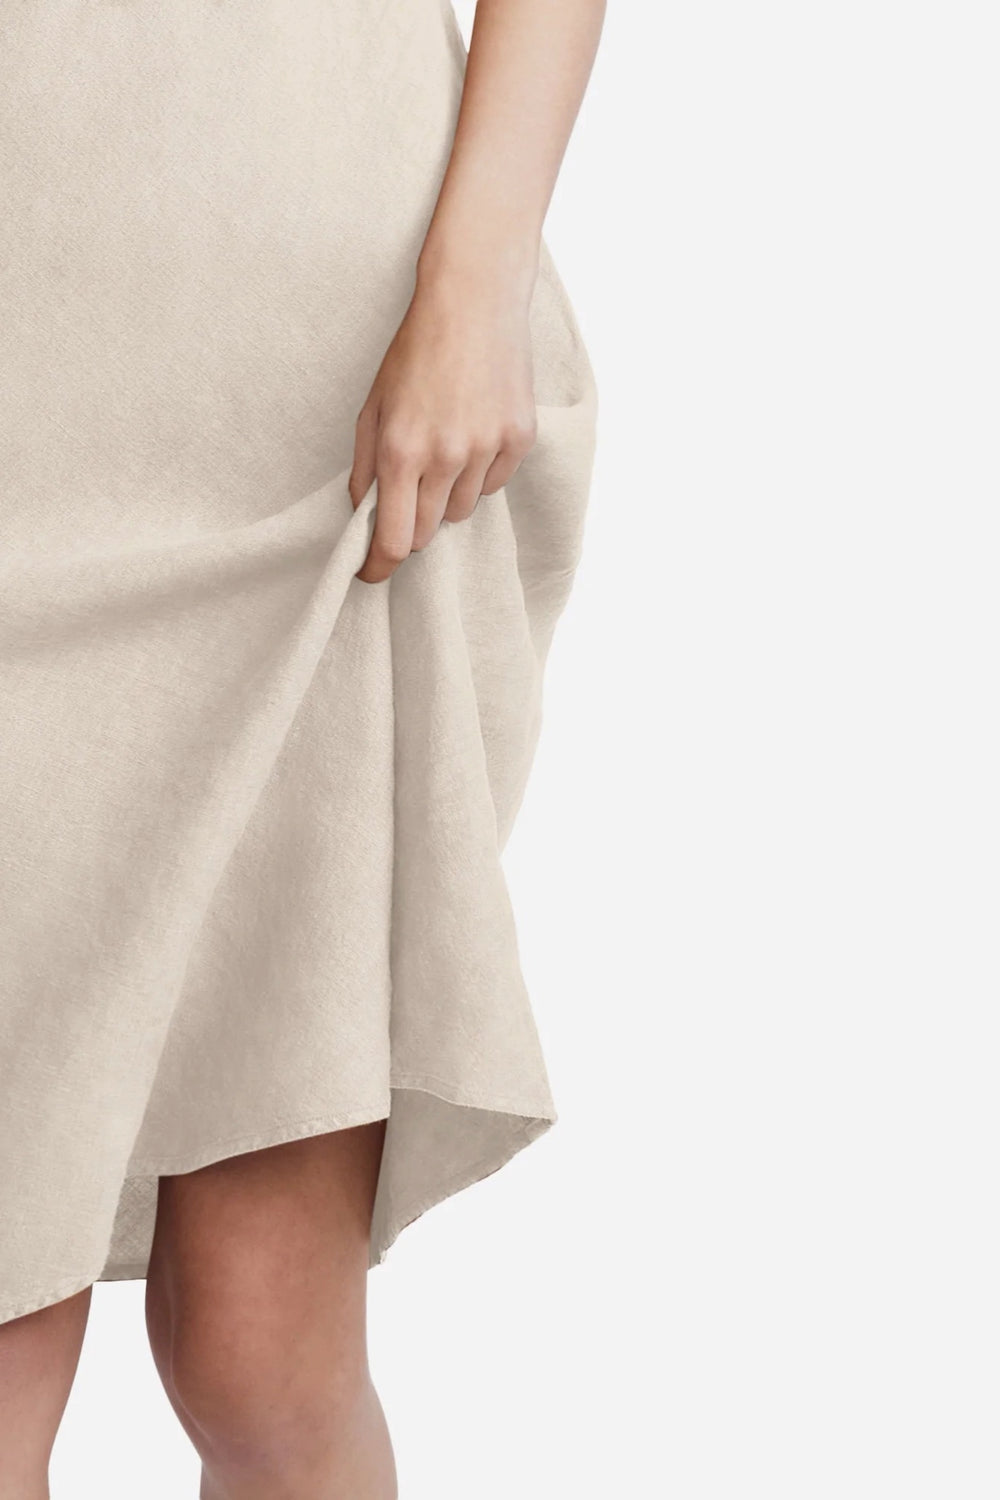 Natural Linen Slip Dress